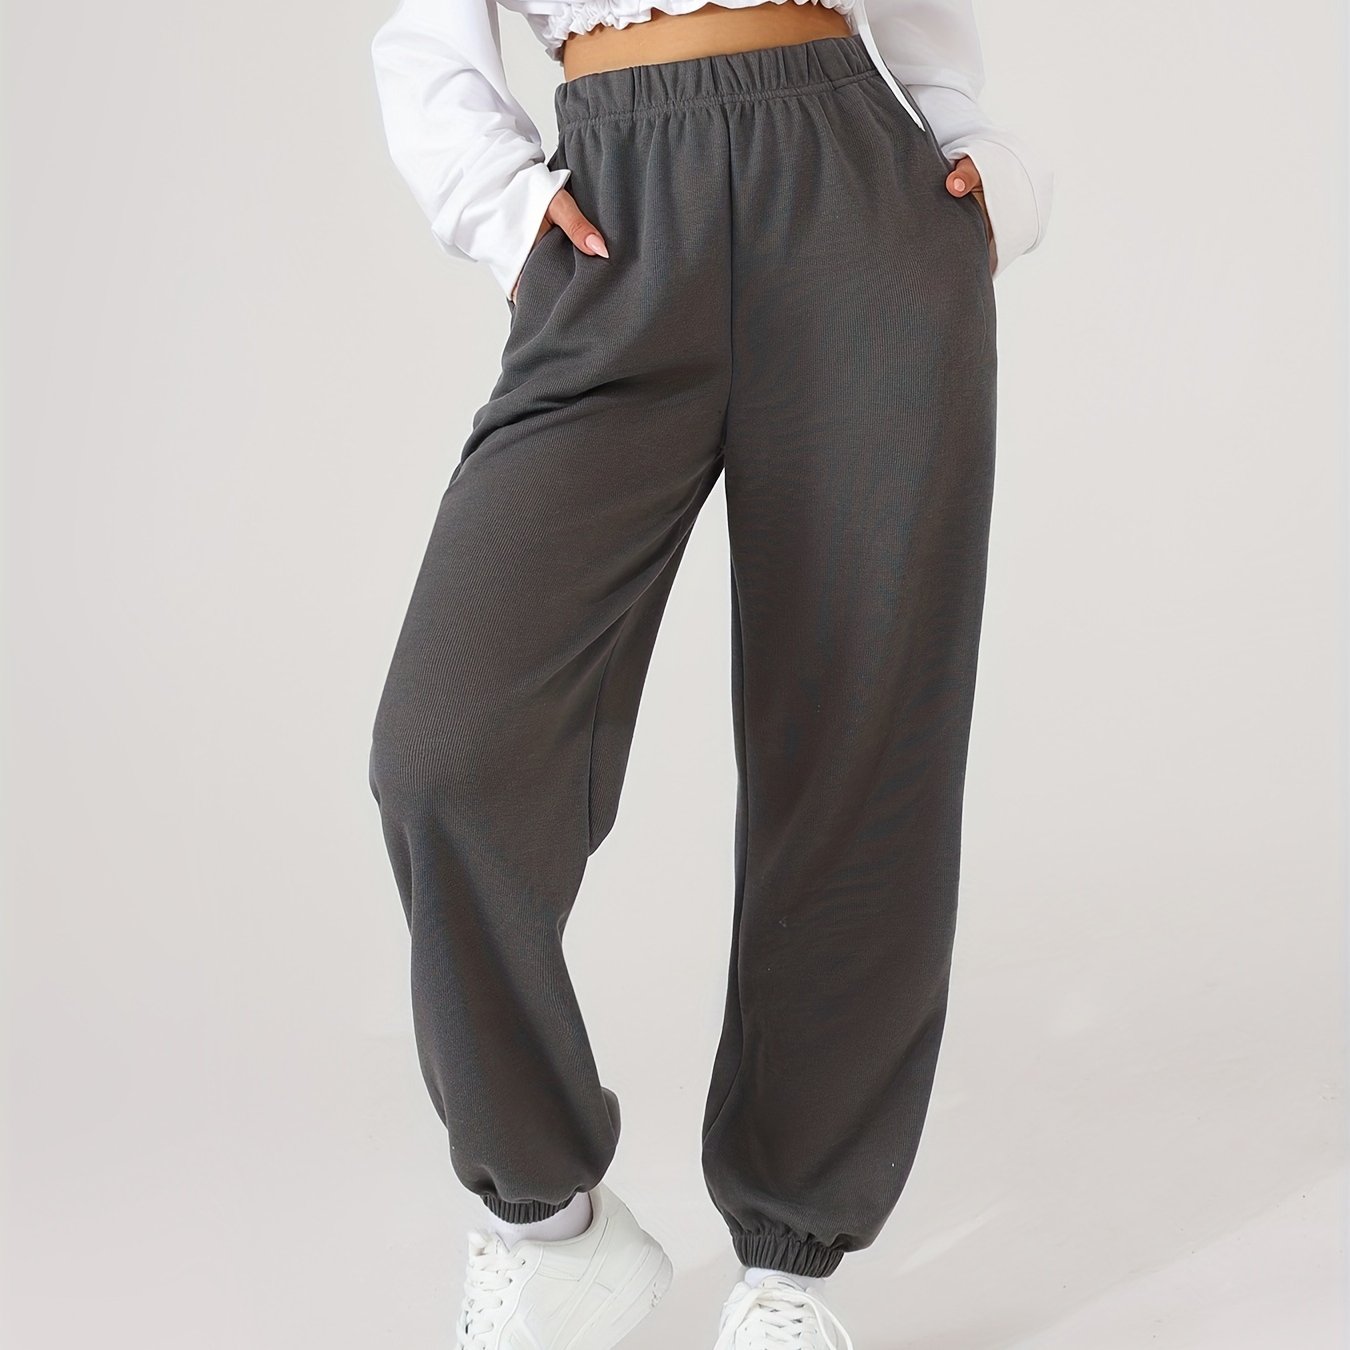 Antmvs Women's Elastic  Solid Color High Waist Sweatpants Autumn And Winter, Comfortable Loose Workout Pocket Jogger Pants, Women's Activewear